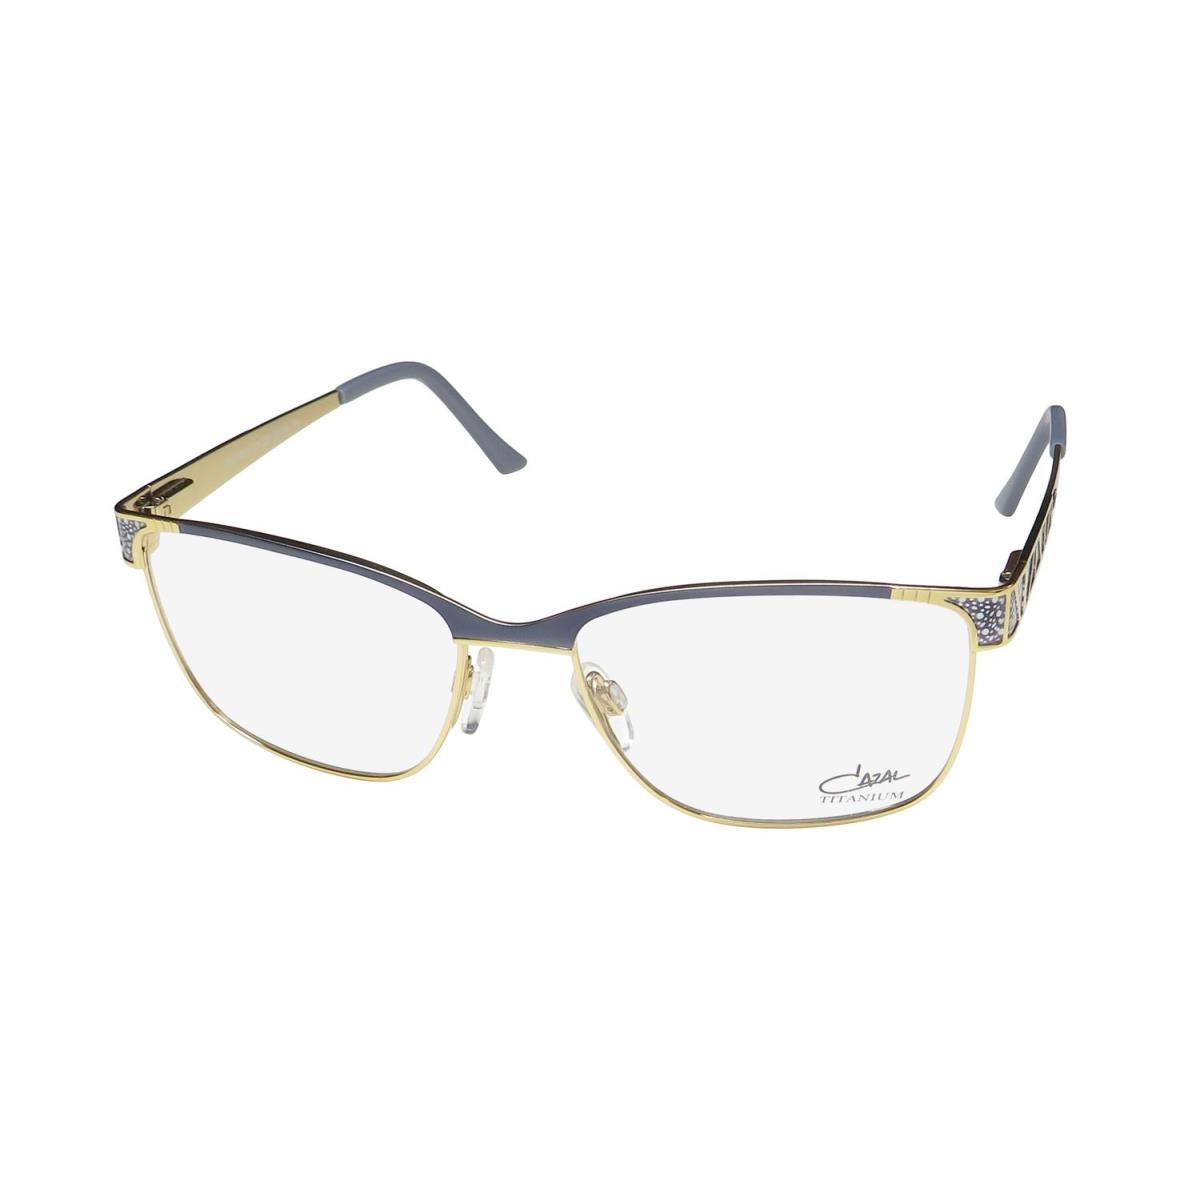 Cazal 4287 Titanium Made IN Germany Designer Rare Eyeglass Frame/glasses Smoke Blue / Gold